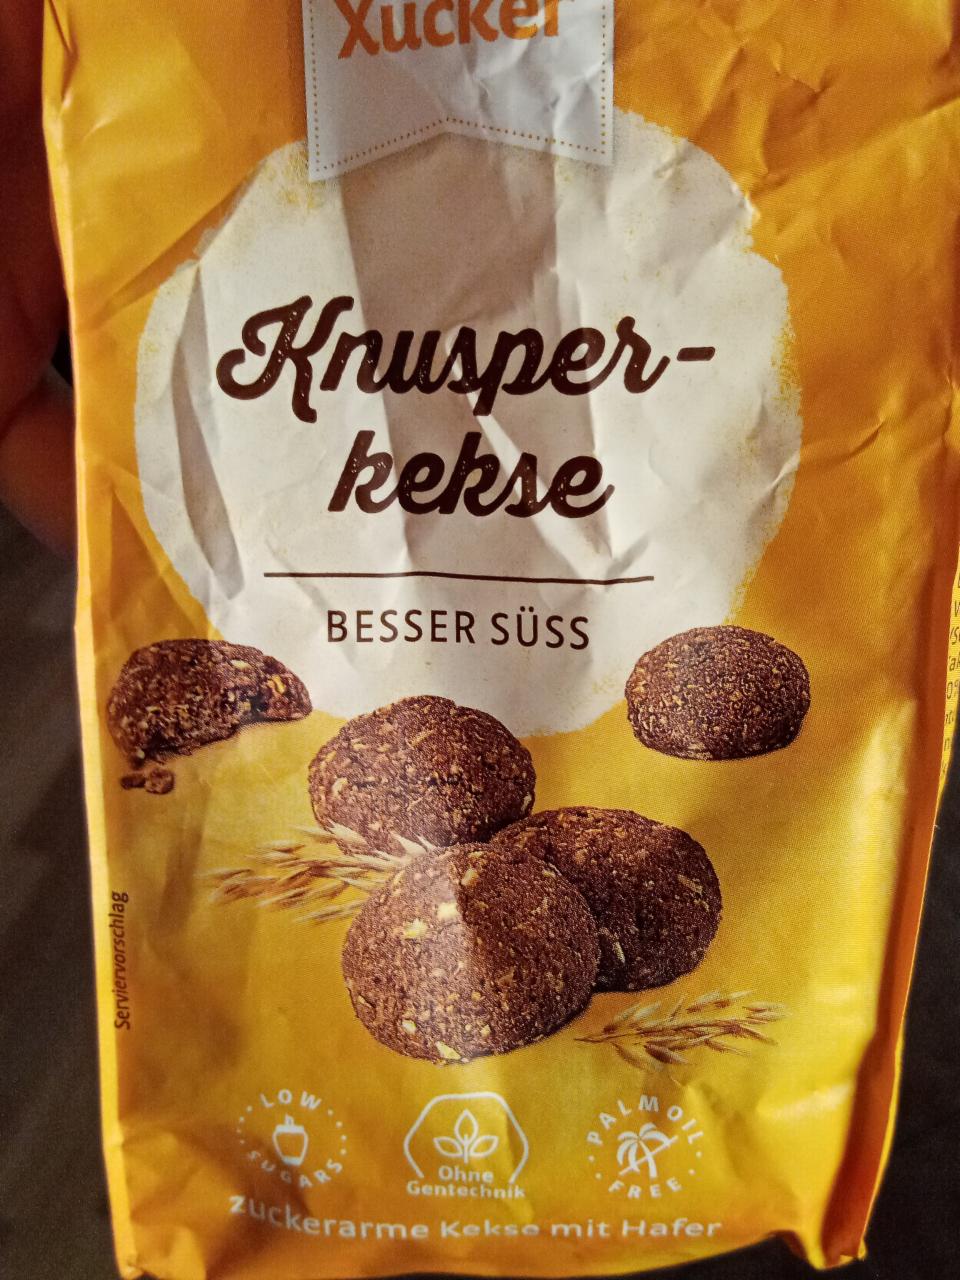 Fotografie - Knusper kekse besser süss Xucker